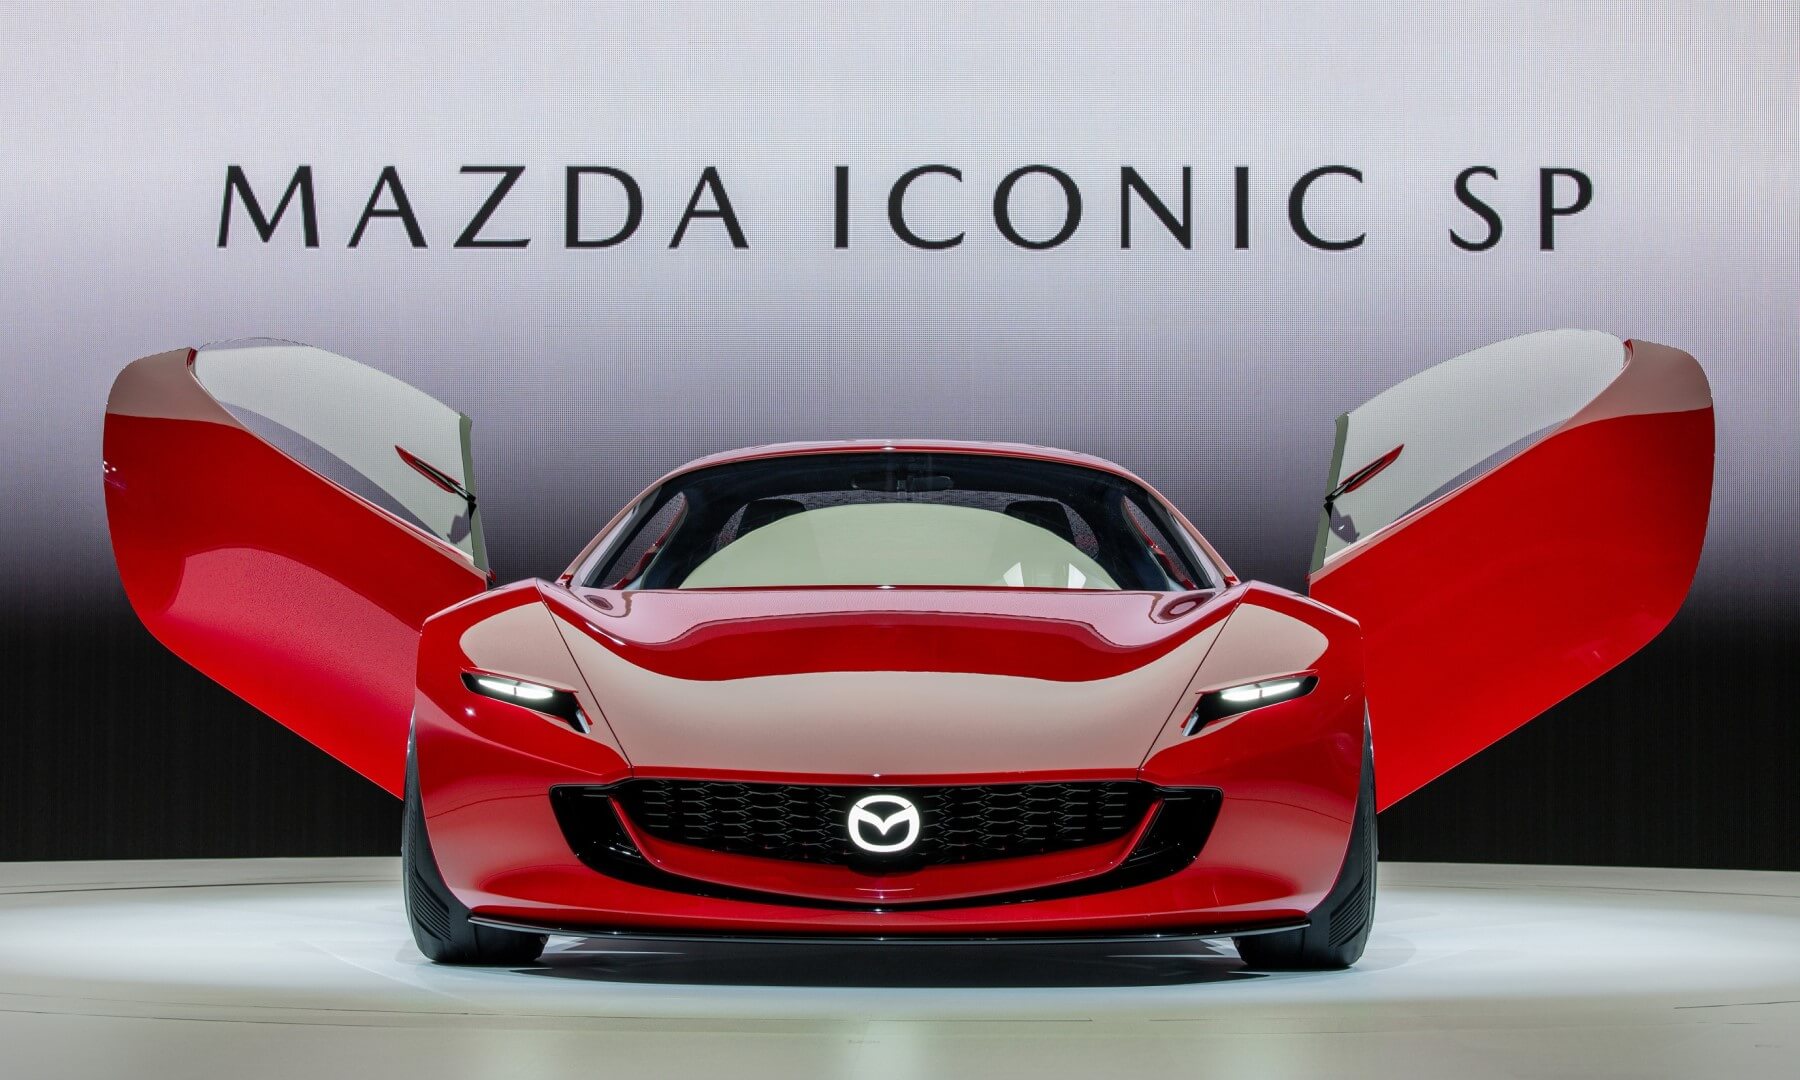 Mazda Iconic SP front